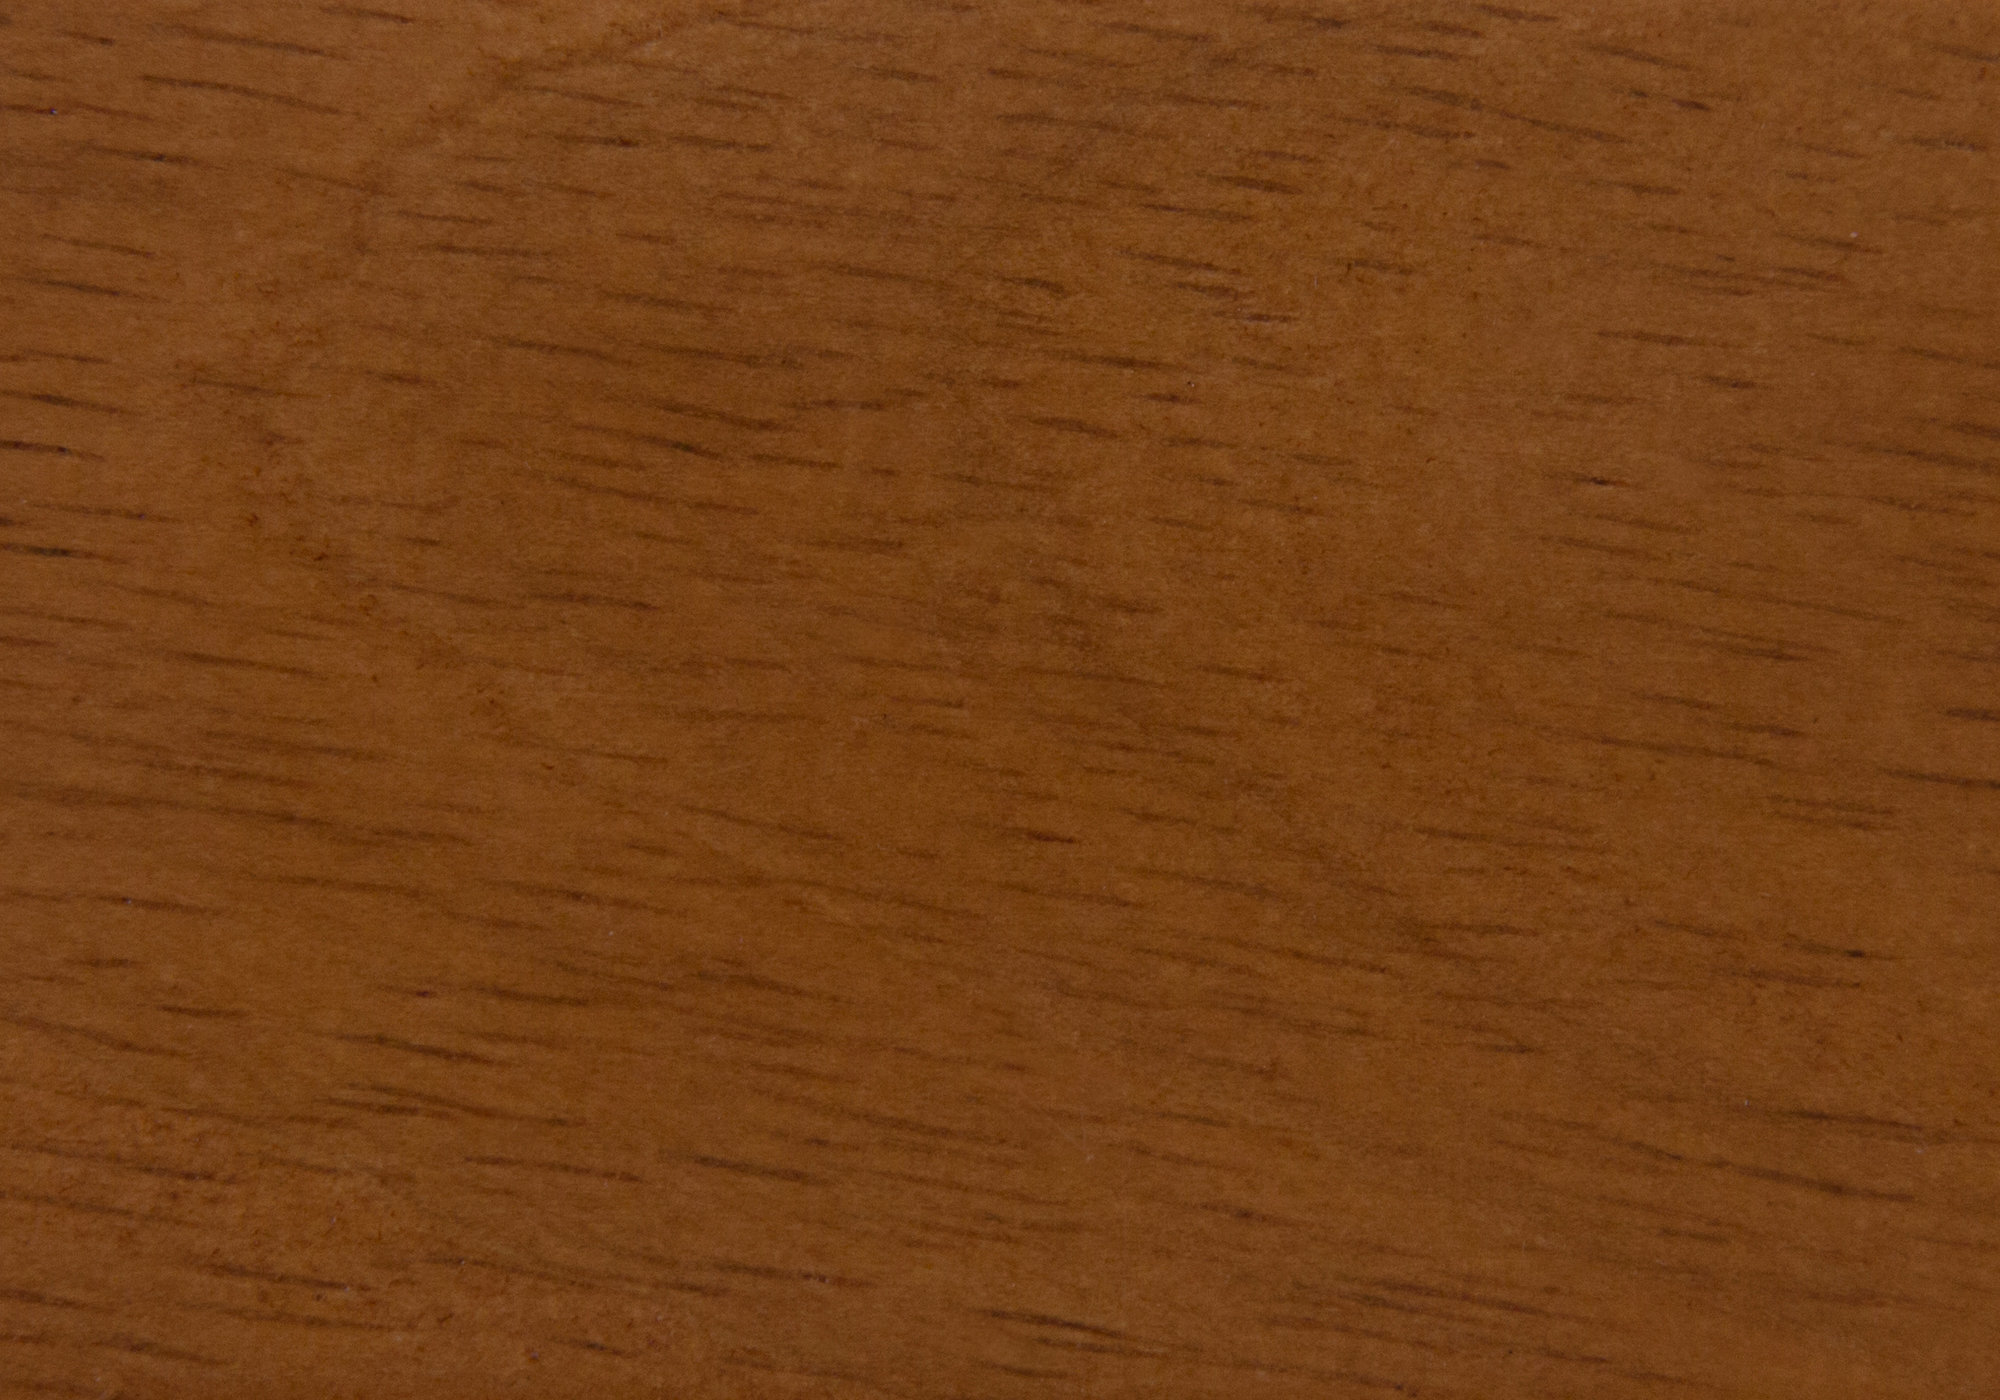 16.25" x 16.25" x 69" Oak Solid Wood Coat Rack